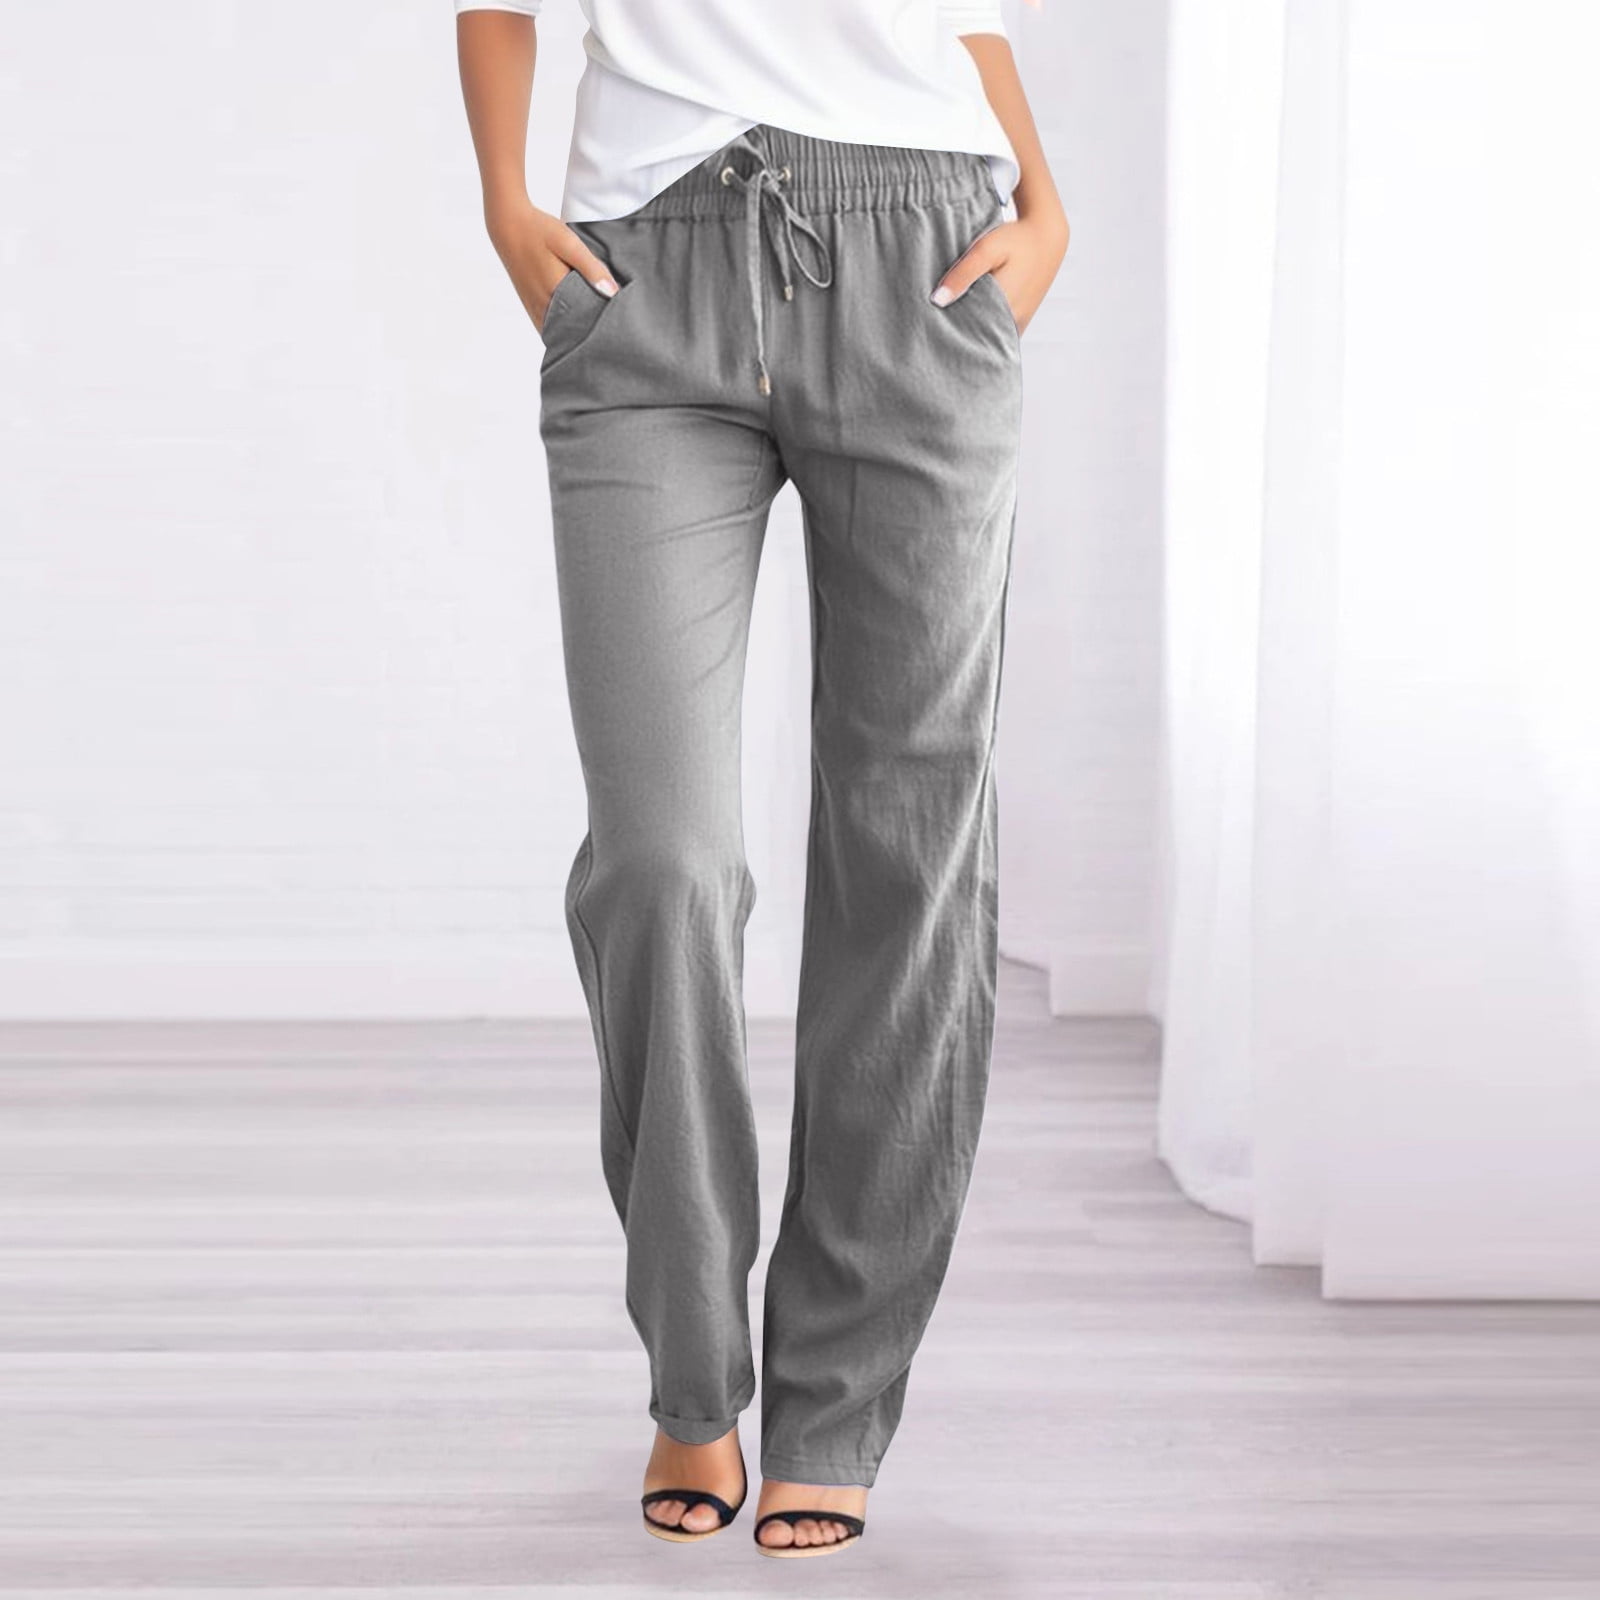 Yuwegr Women's Solid Straight Cotton Linen Pants High Waist Drawstring ...